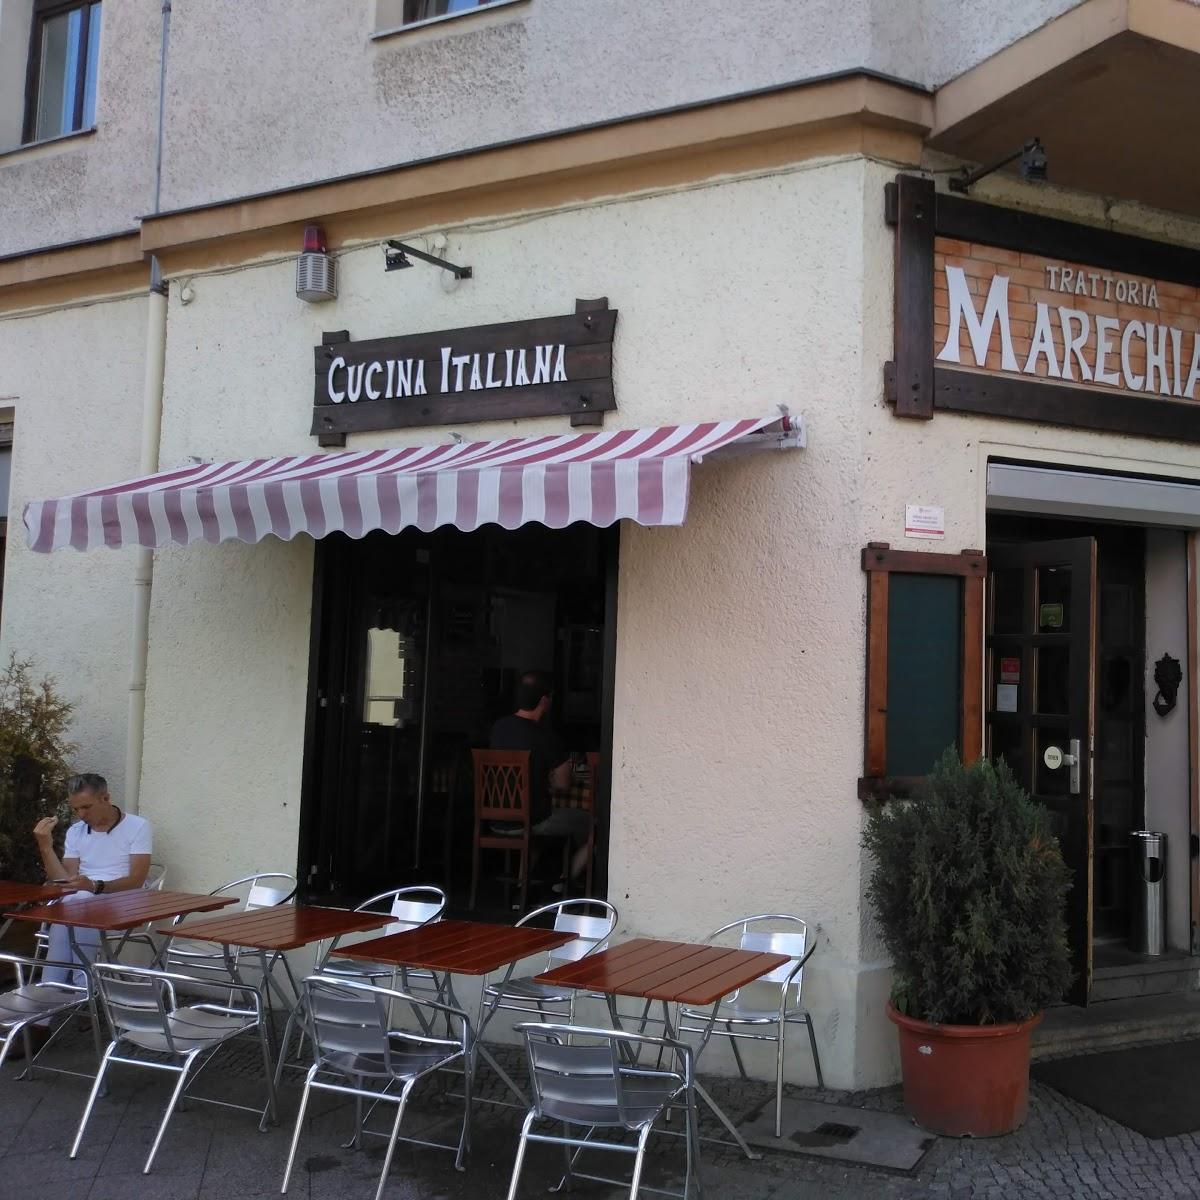 Restaurant "Marechiaro Cucina Italiana" in Berlin